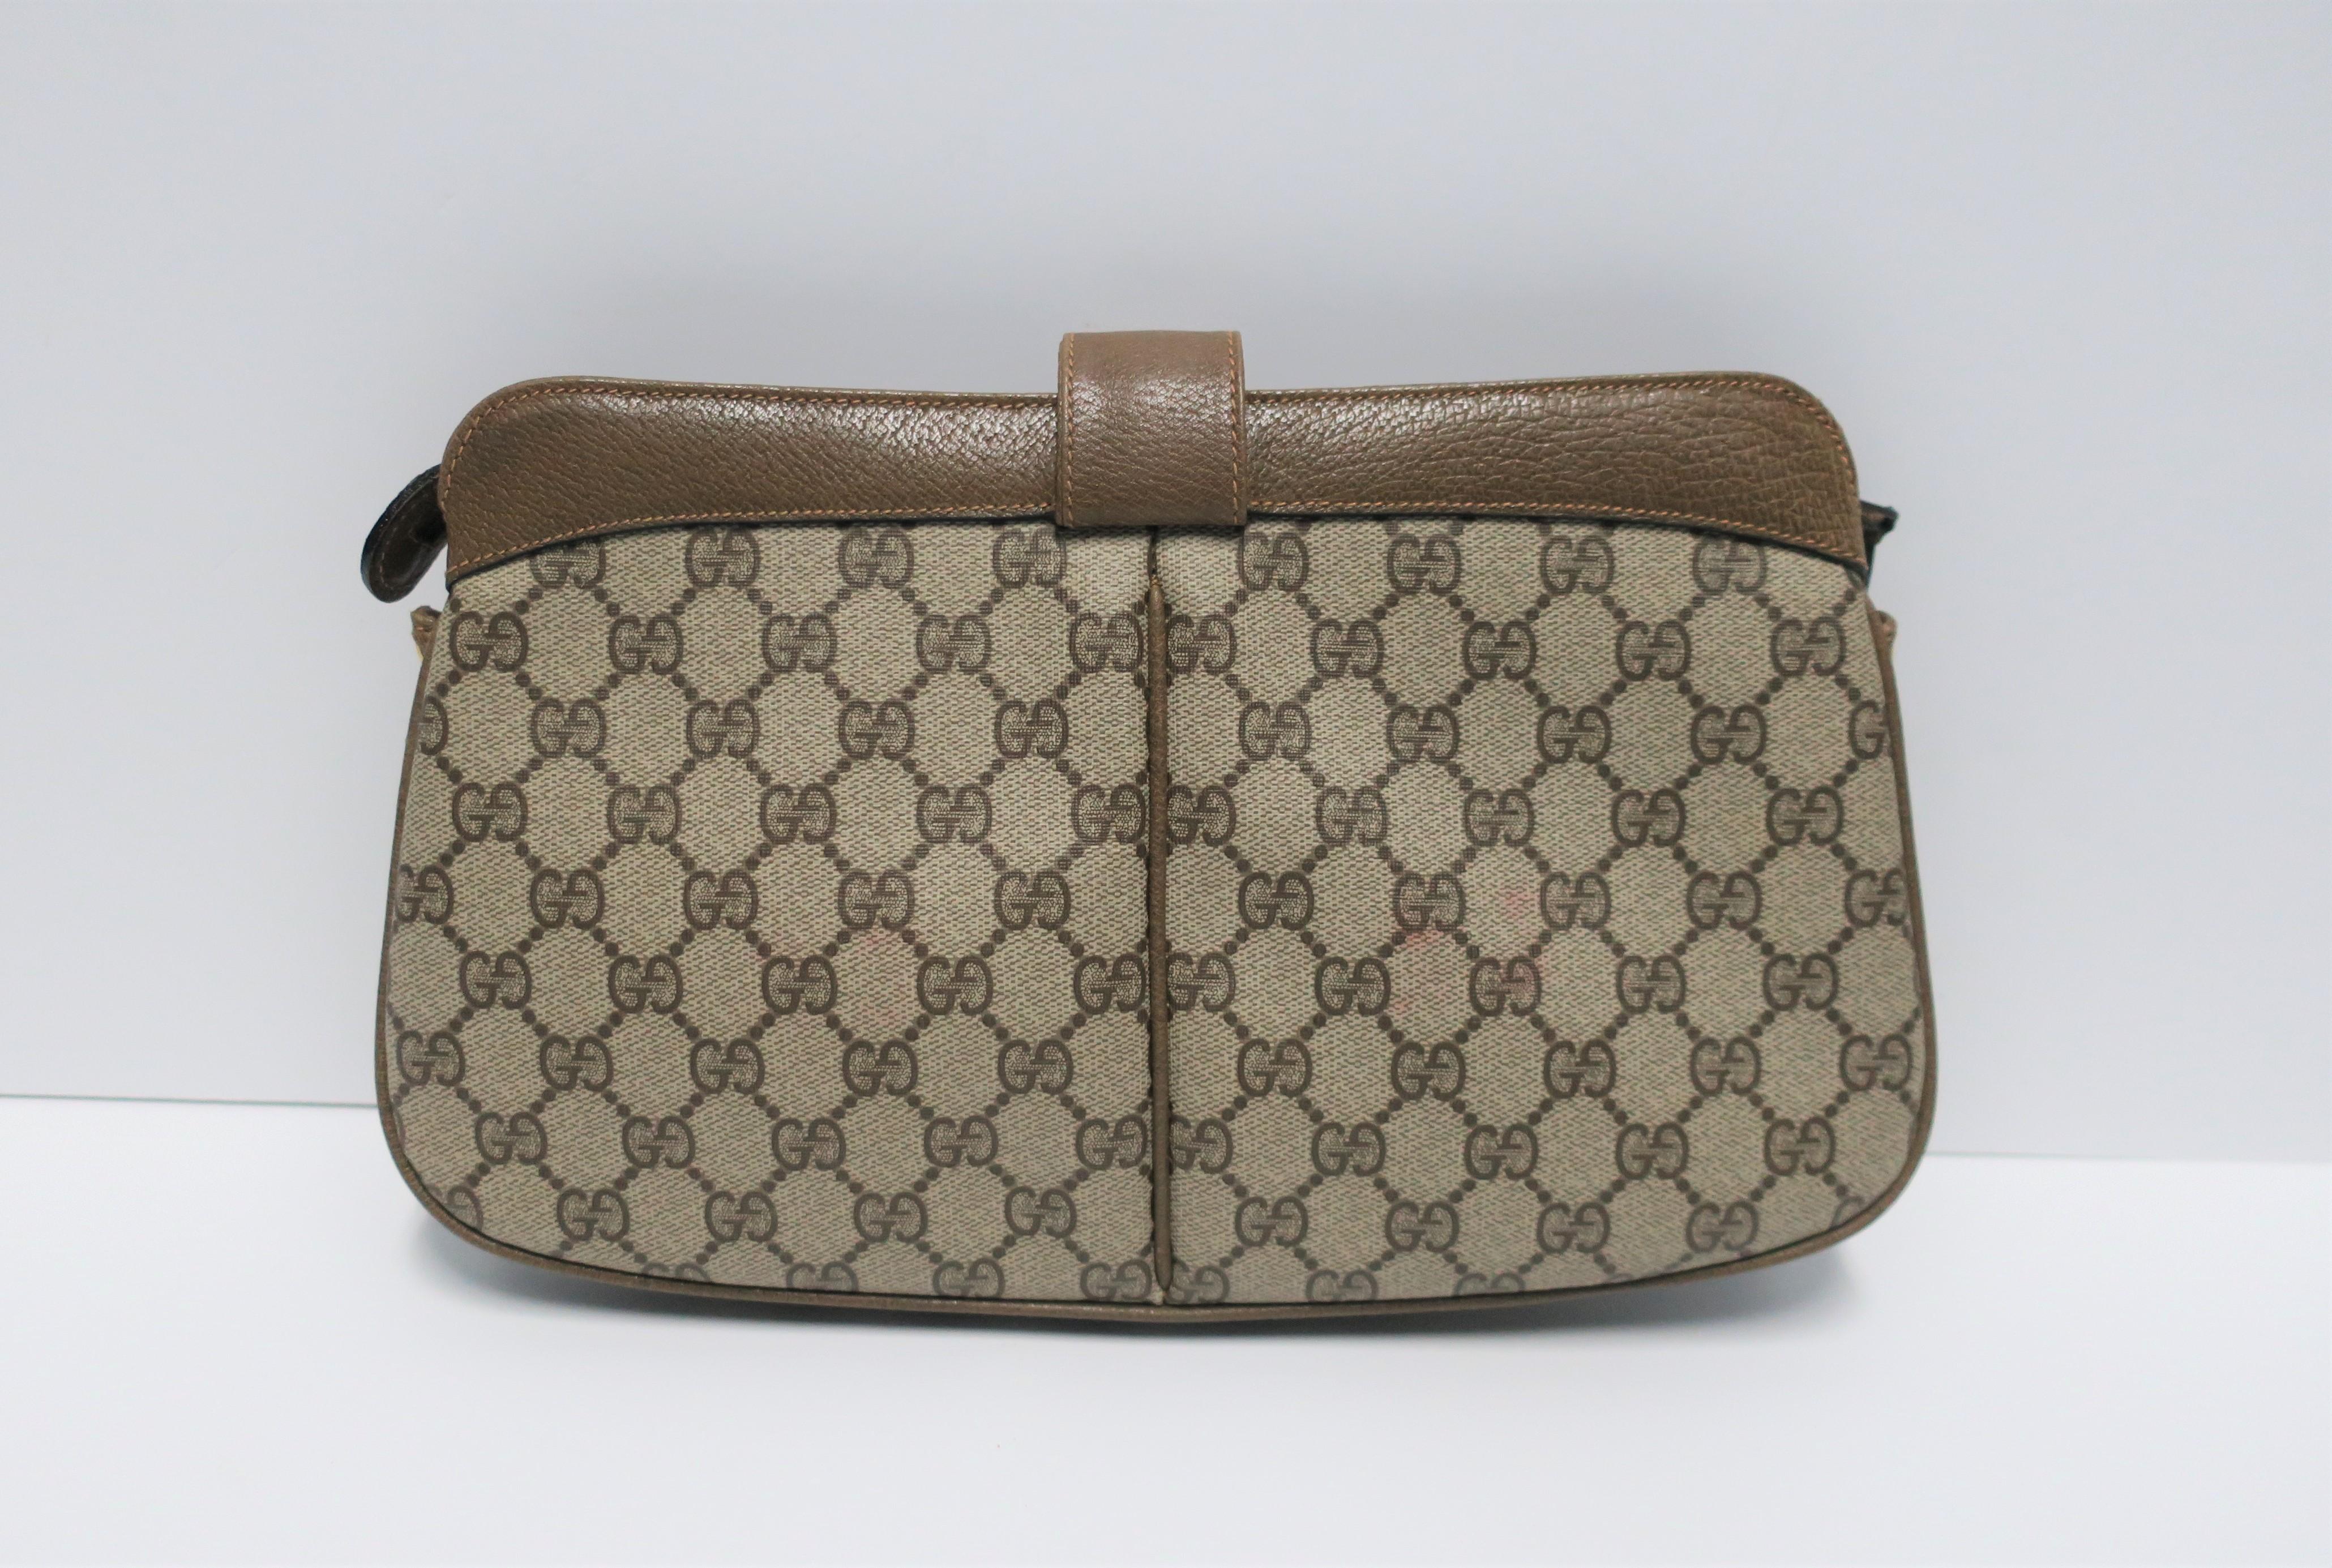 Italian Gucci Leather and Canvas Handbag Clutch